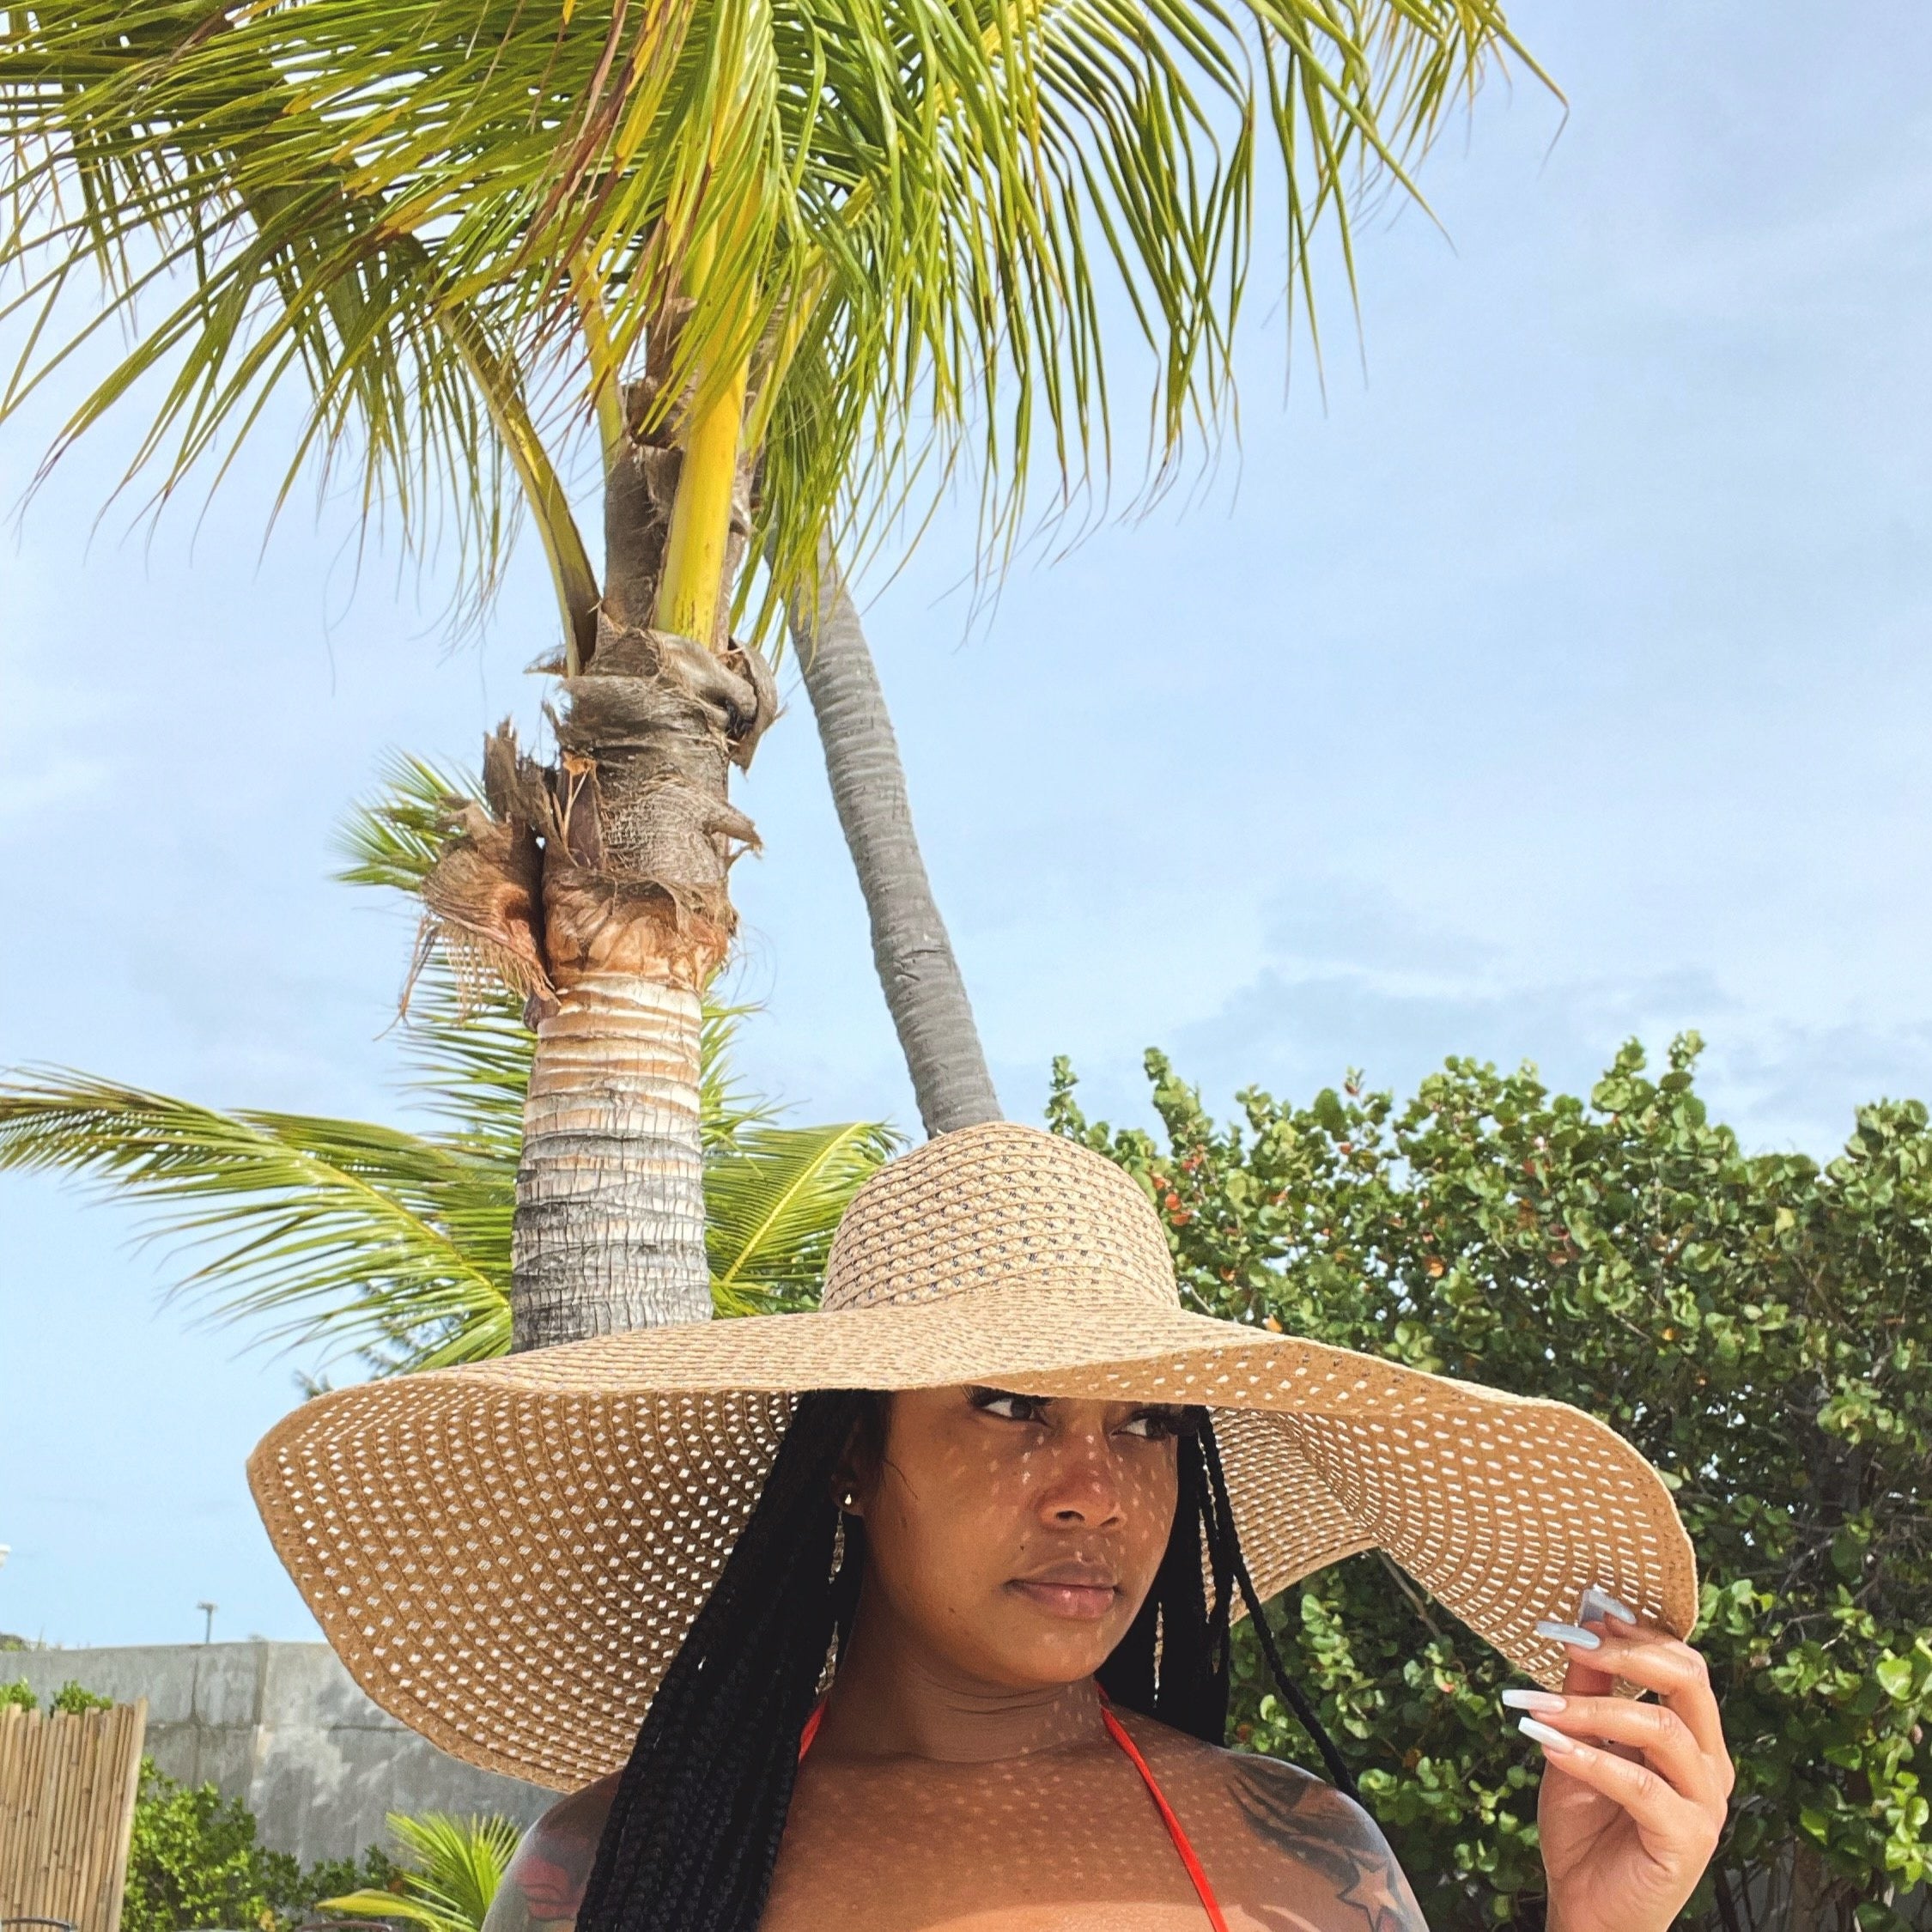 Oversized sun hat - We Stay Pretty